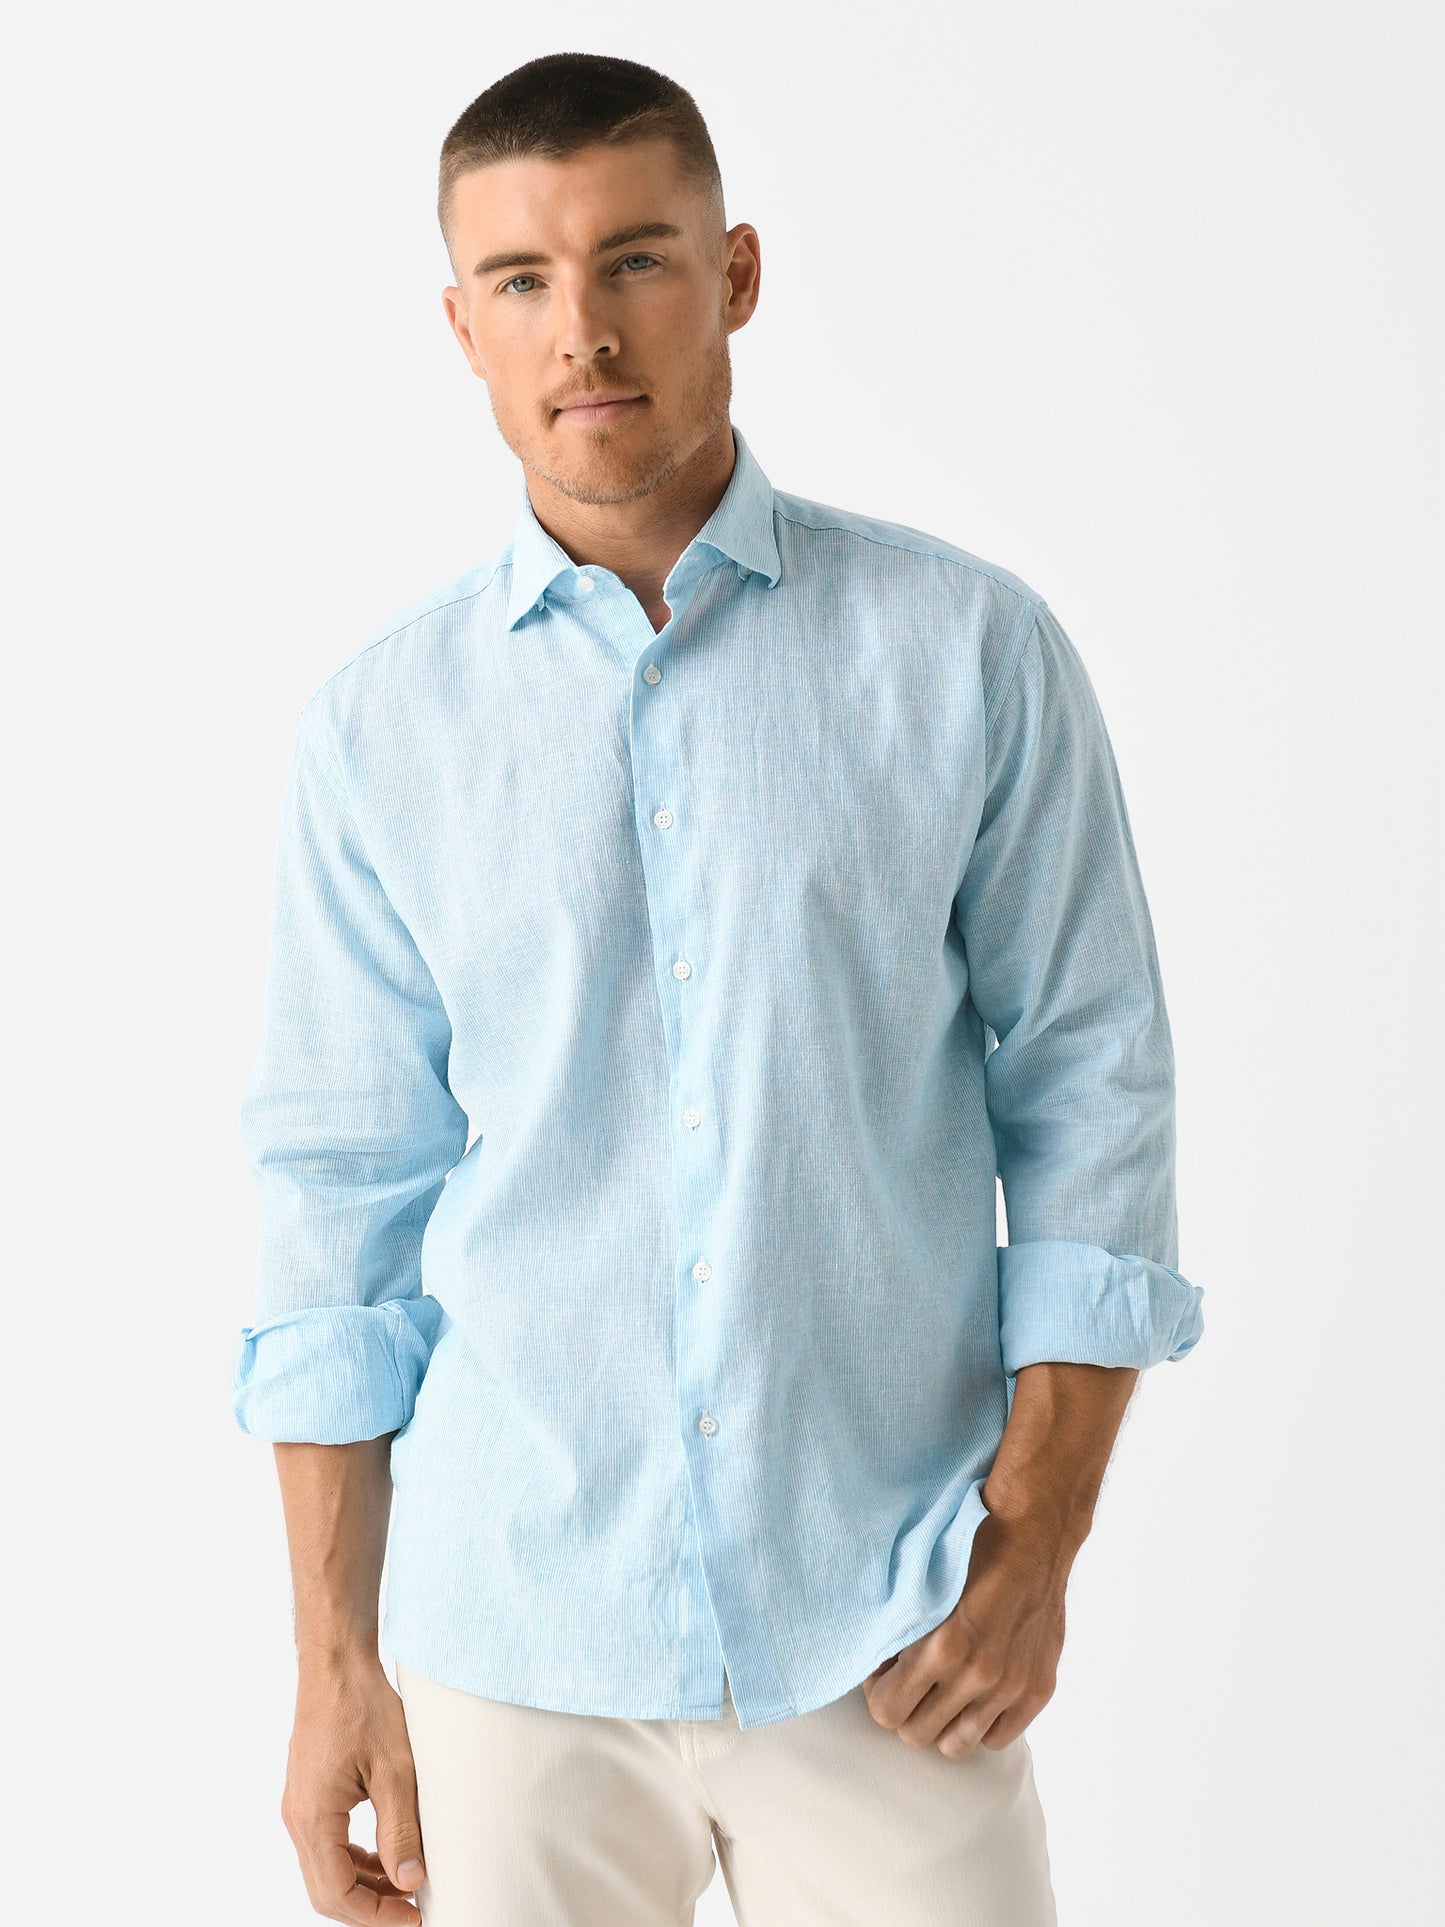 Miller Westby Men's Frasier Button-Down Shirt